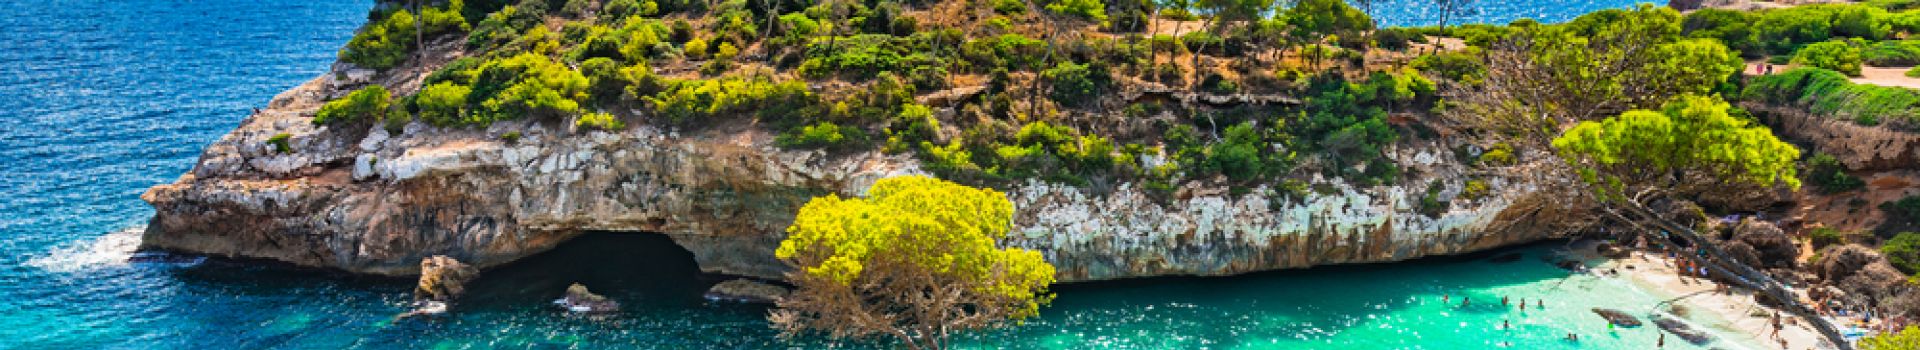 Cheap holidays to Majorca with Cassidy Travel